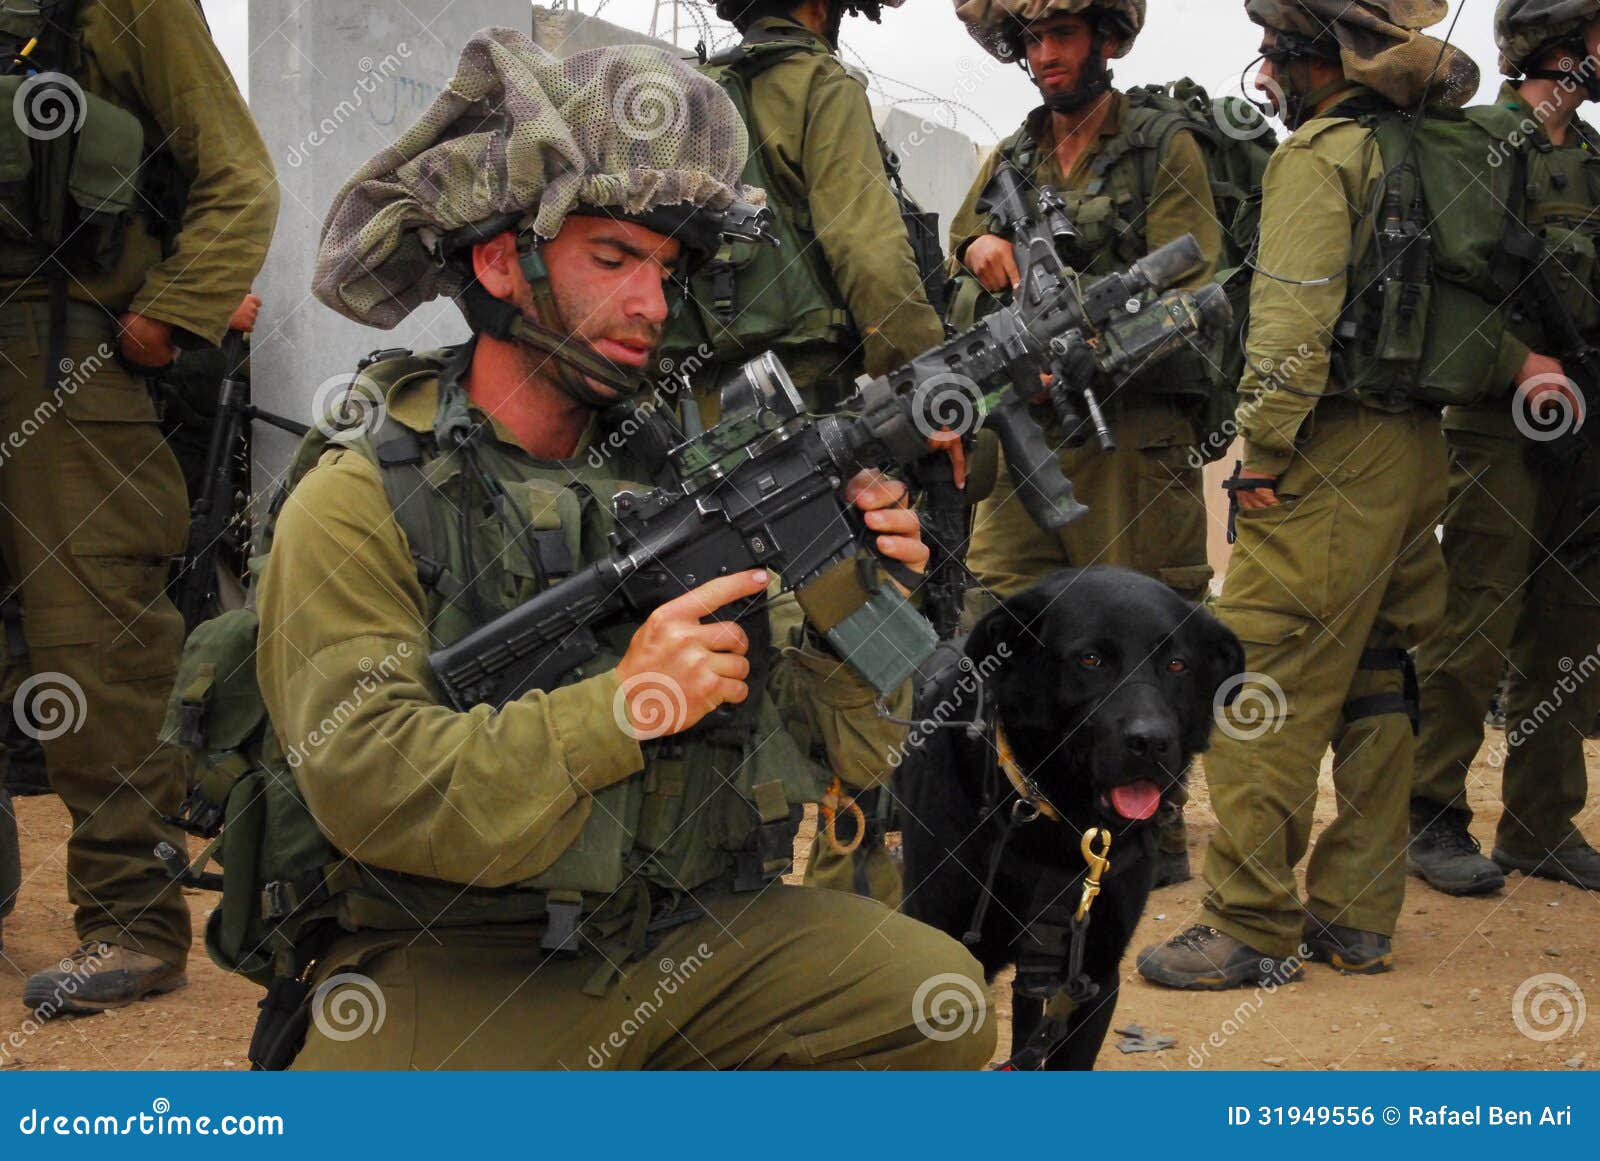 A infantaria da IDF (Forças de Defesa de Israel, o exército